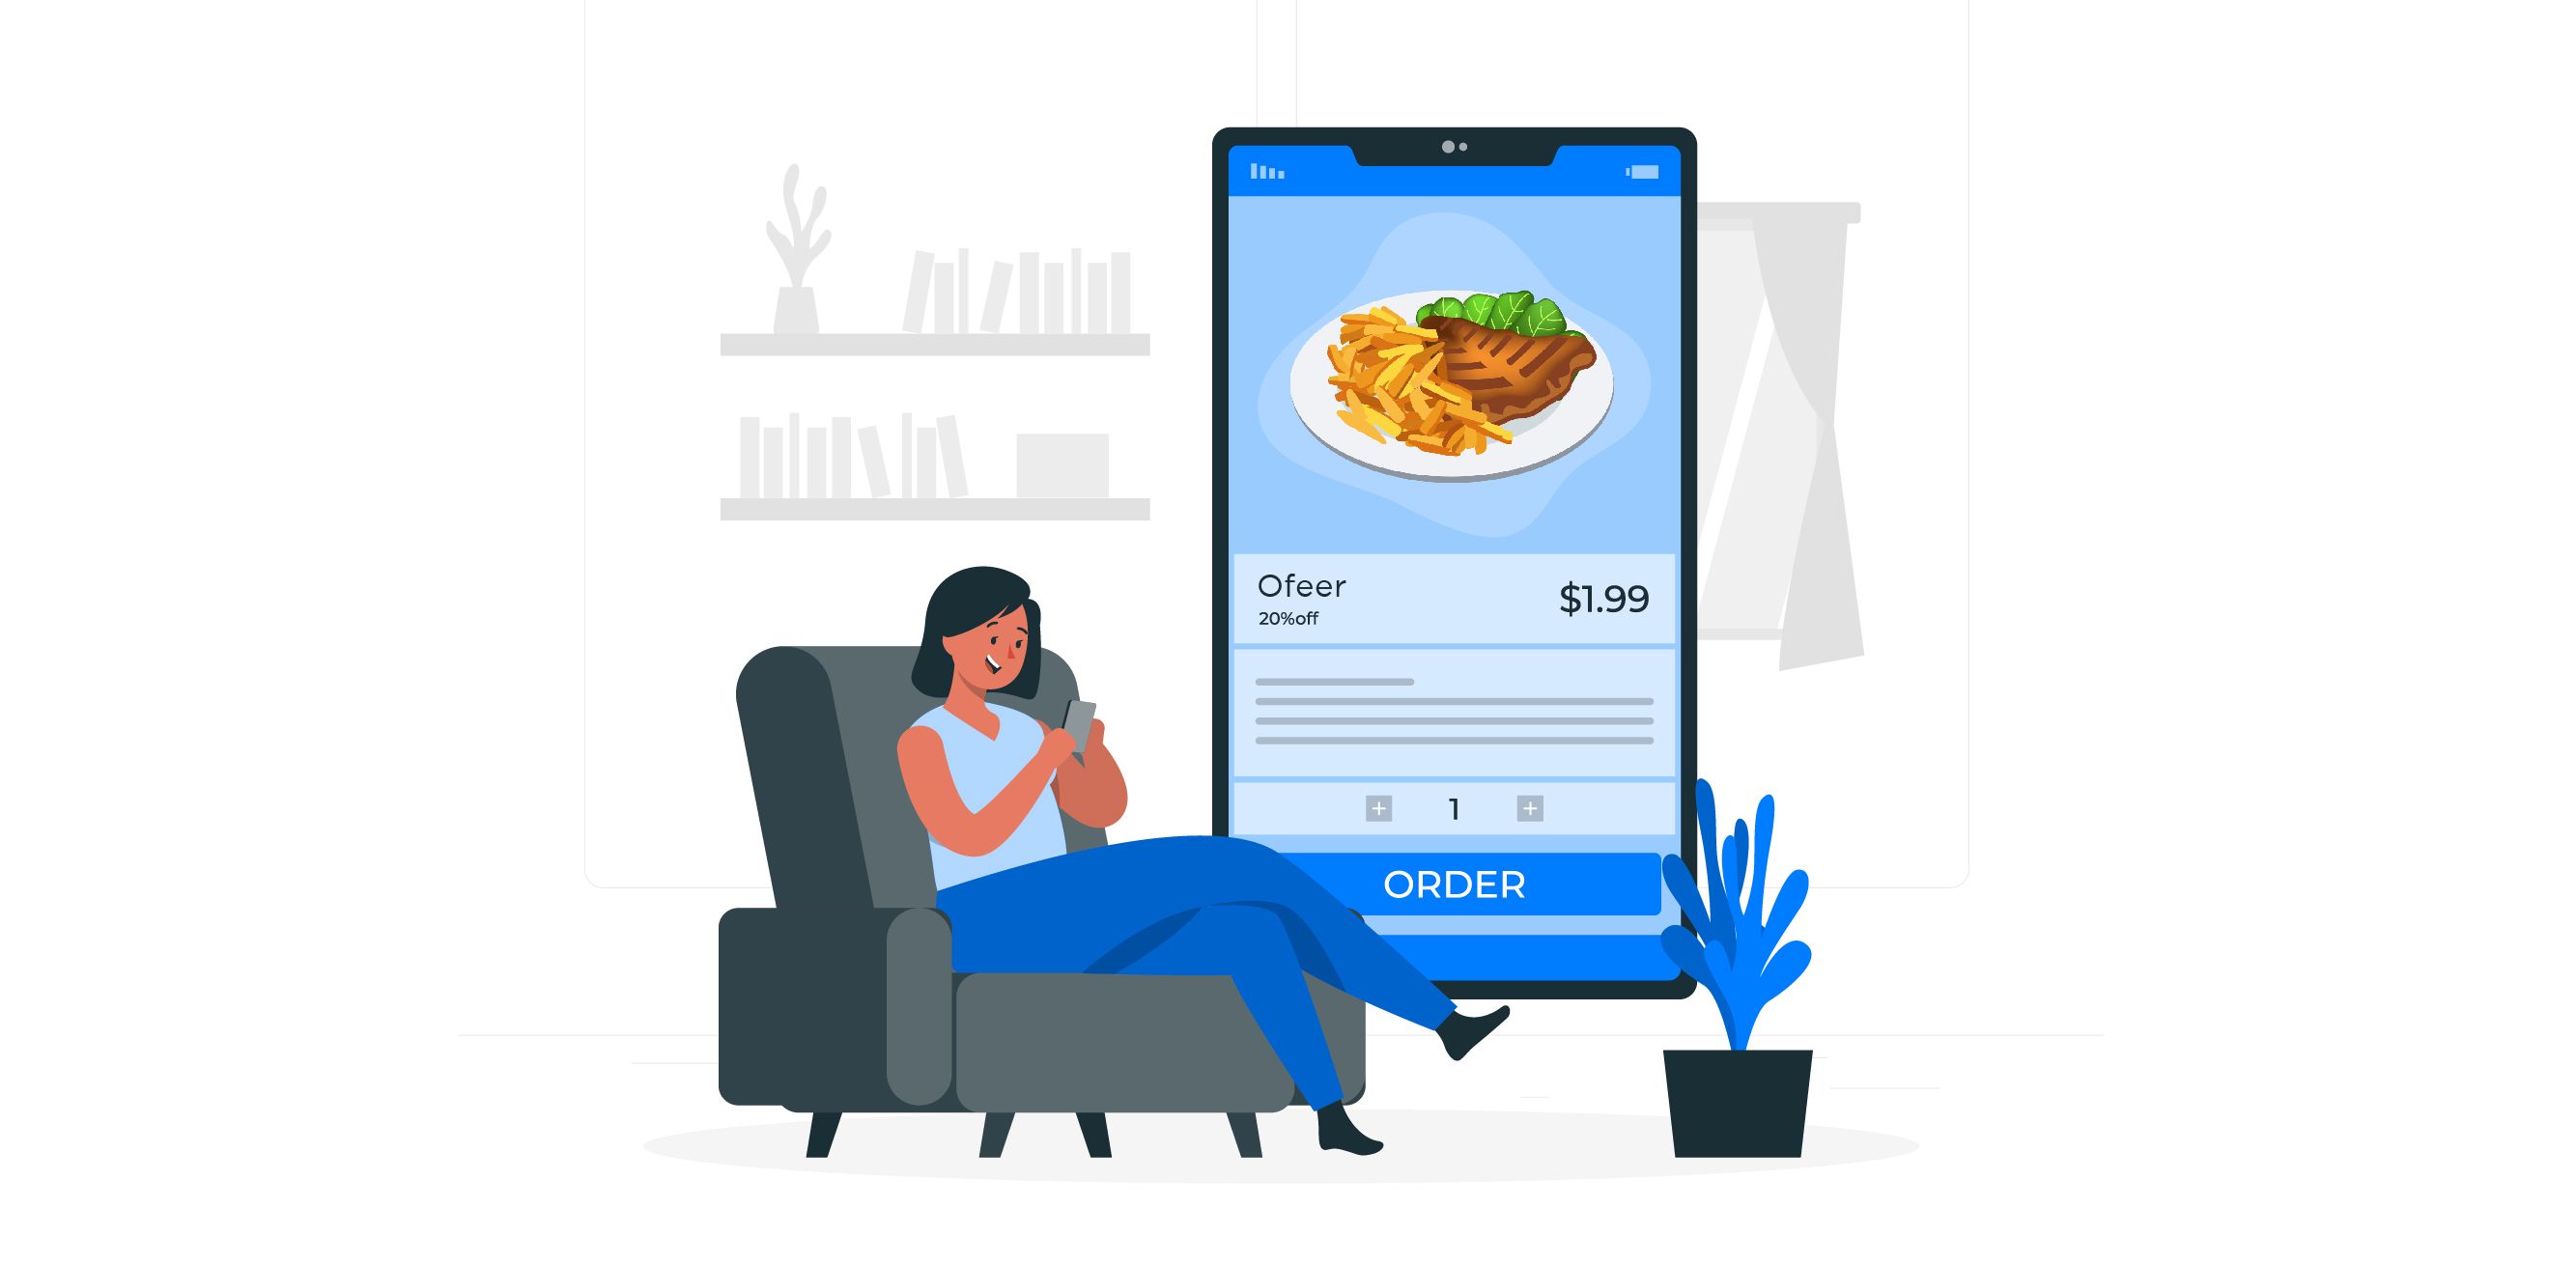 Online food ordering chatbot usage